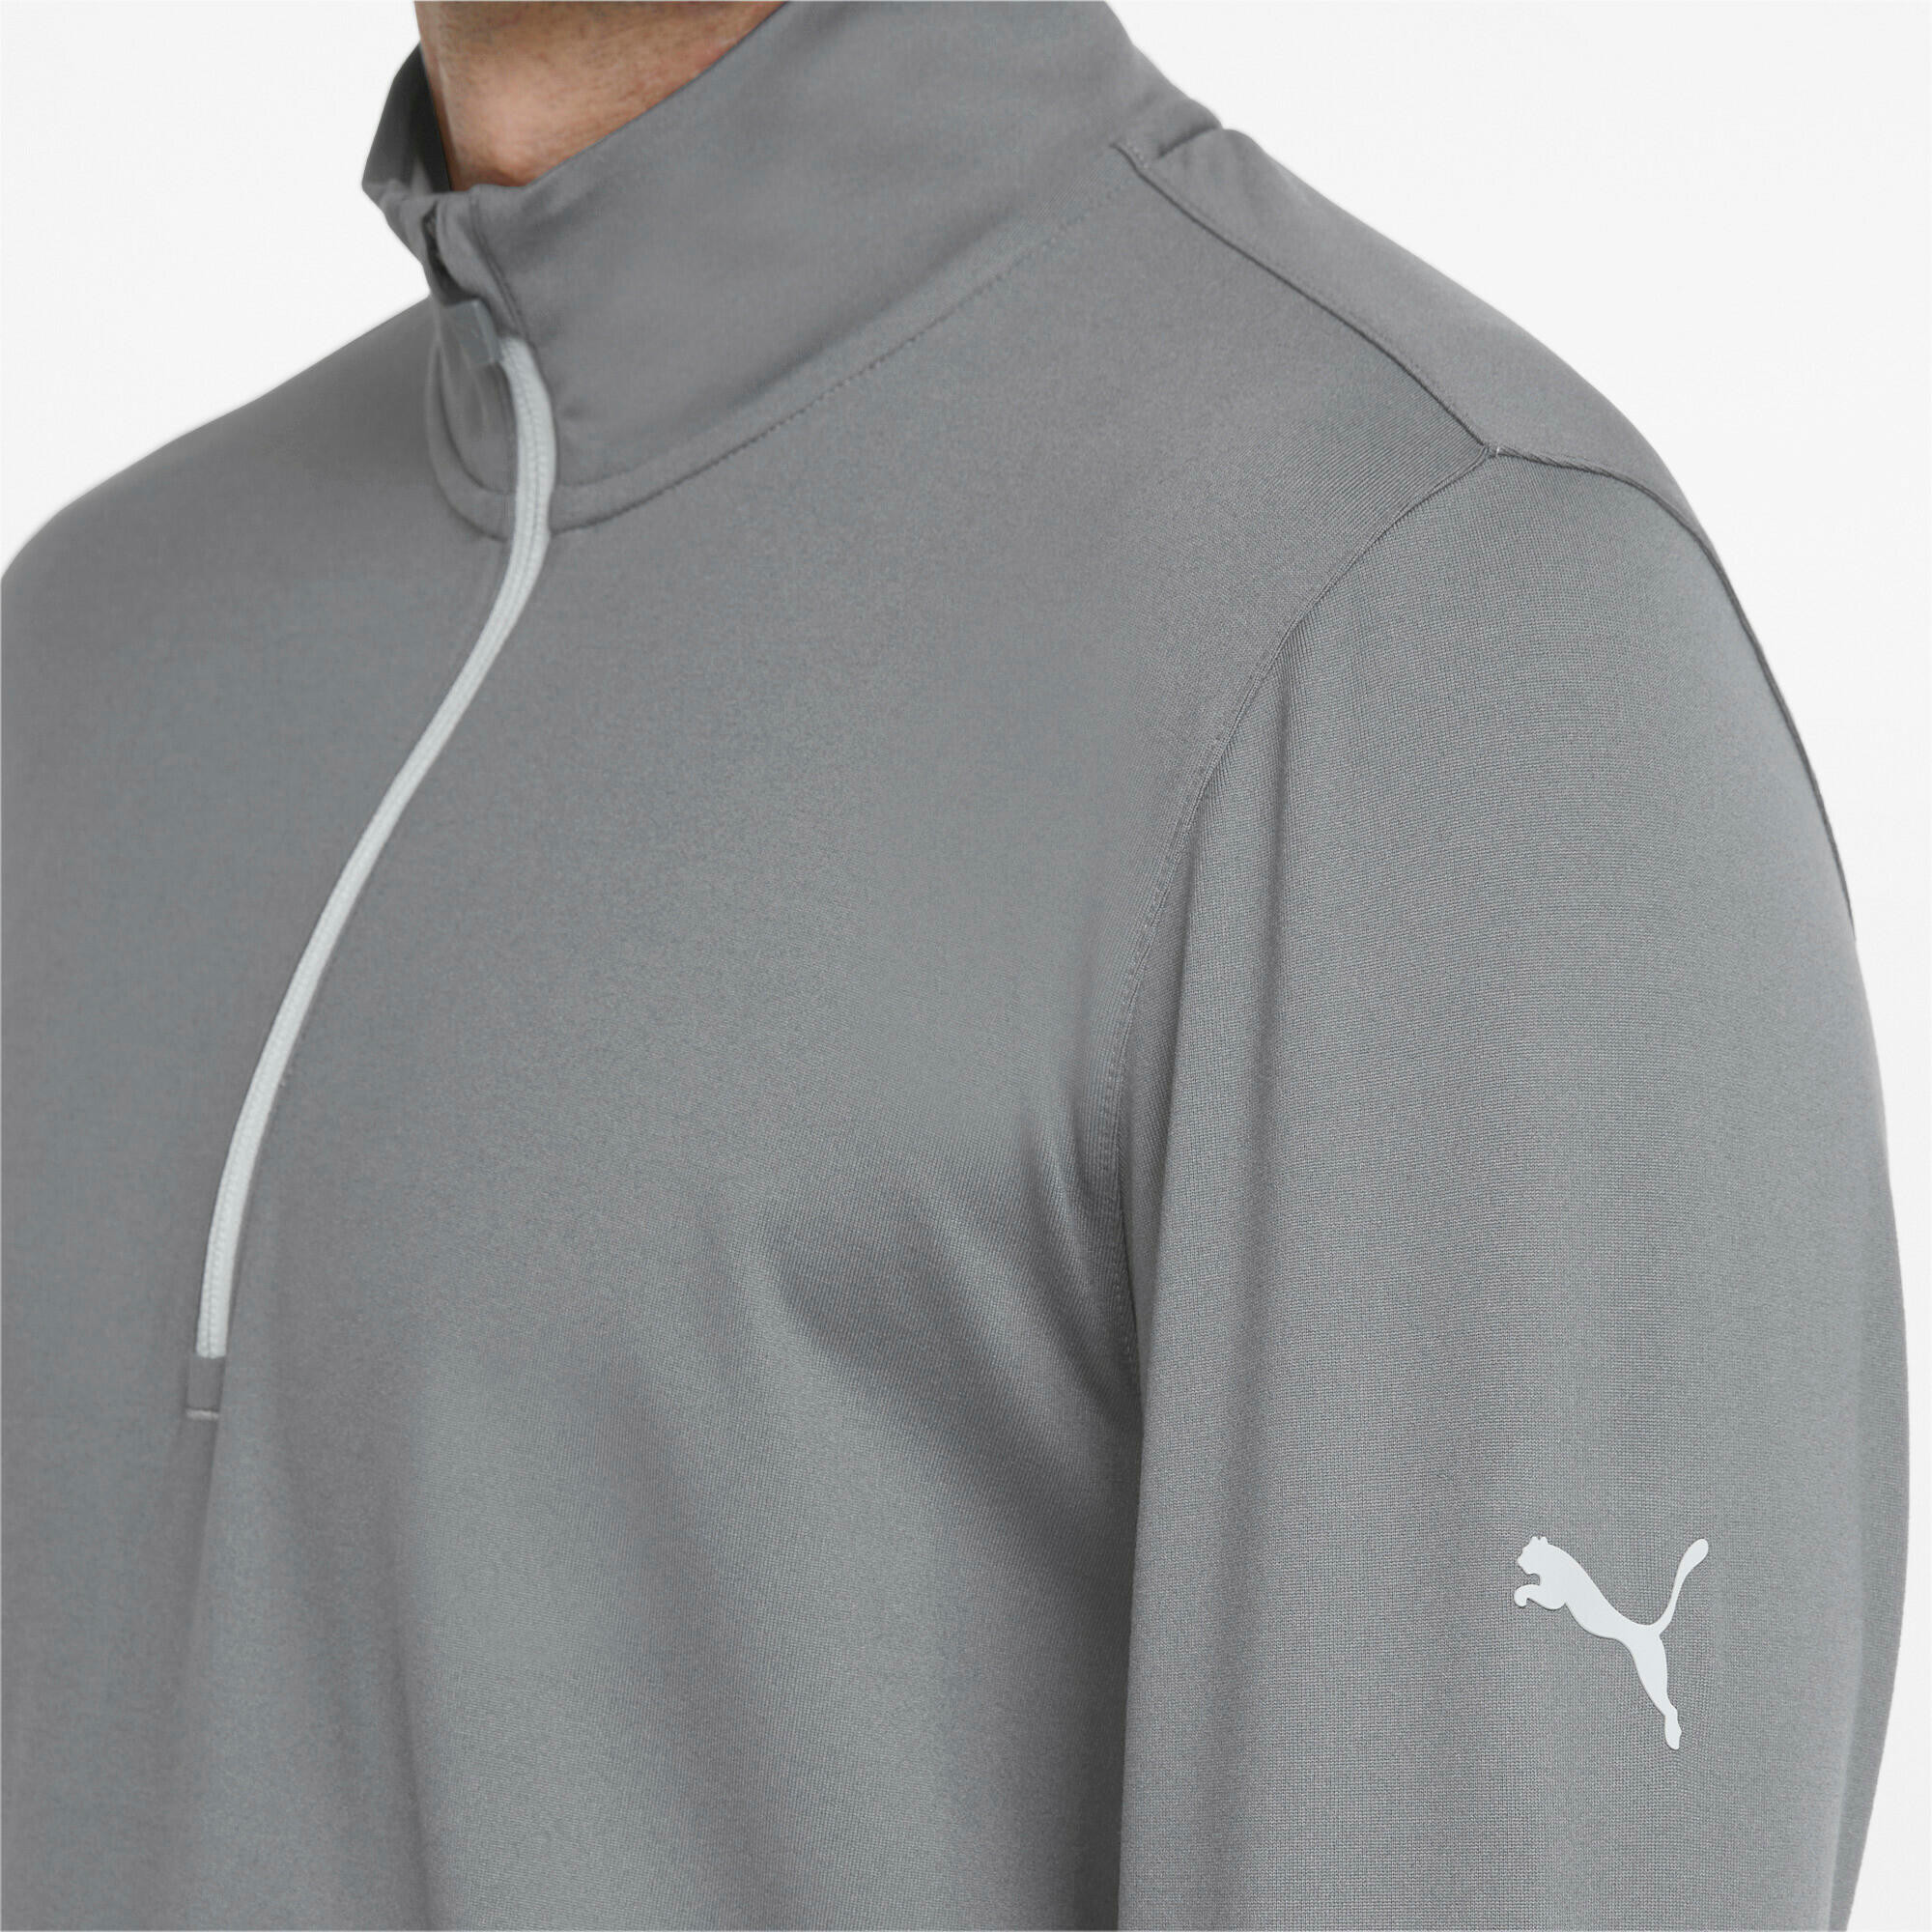 PUMA Mens Gamer Quarter-Zip Golf Sweatshirt - Quiet Shade 6/7